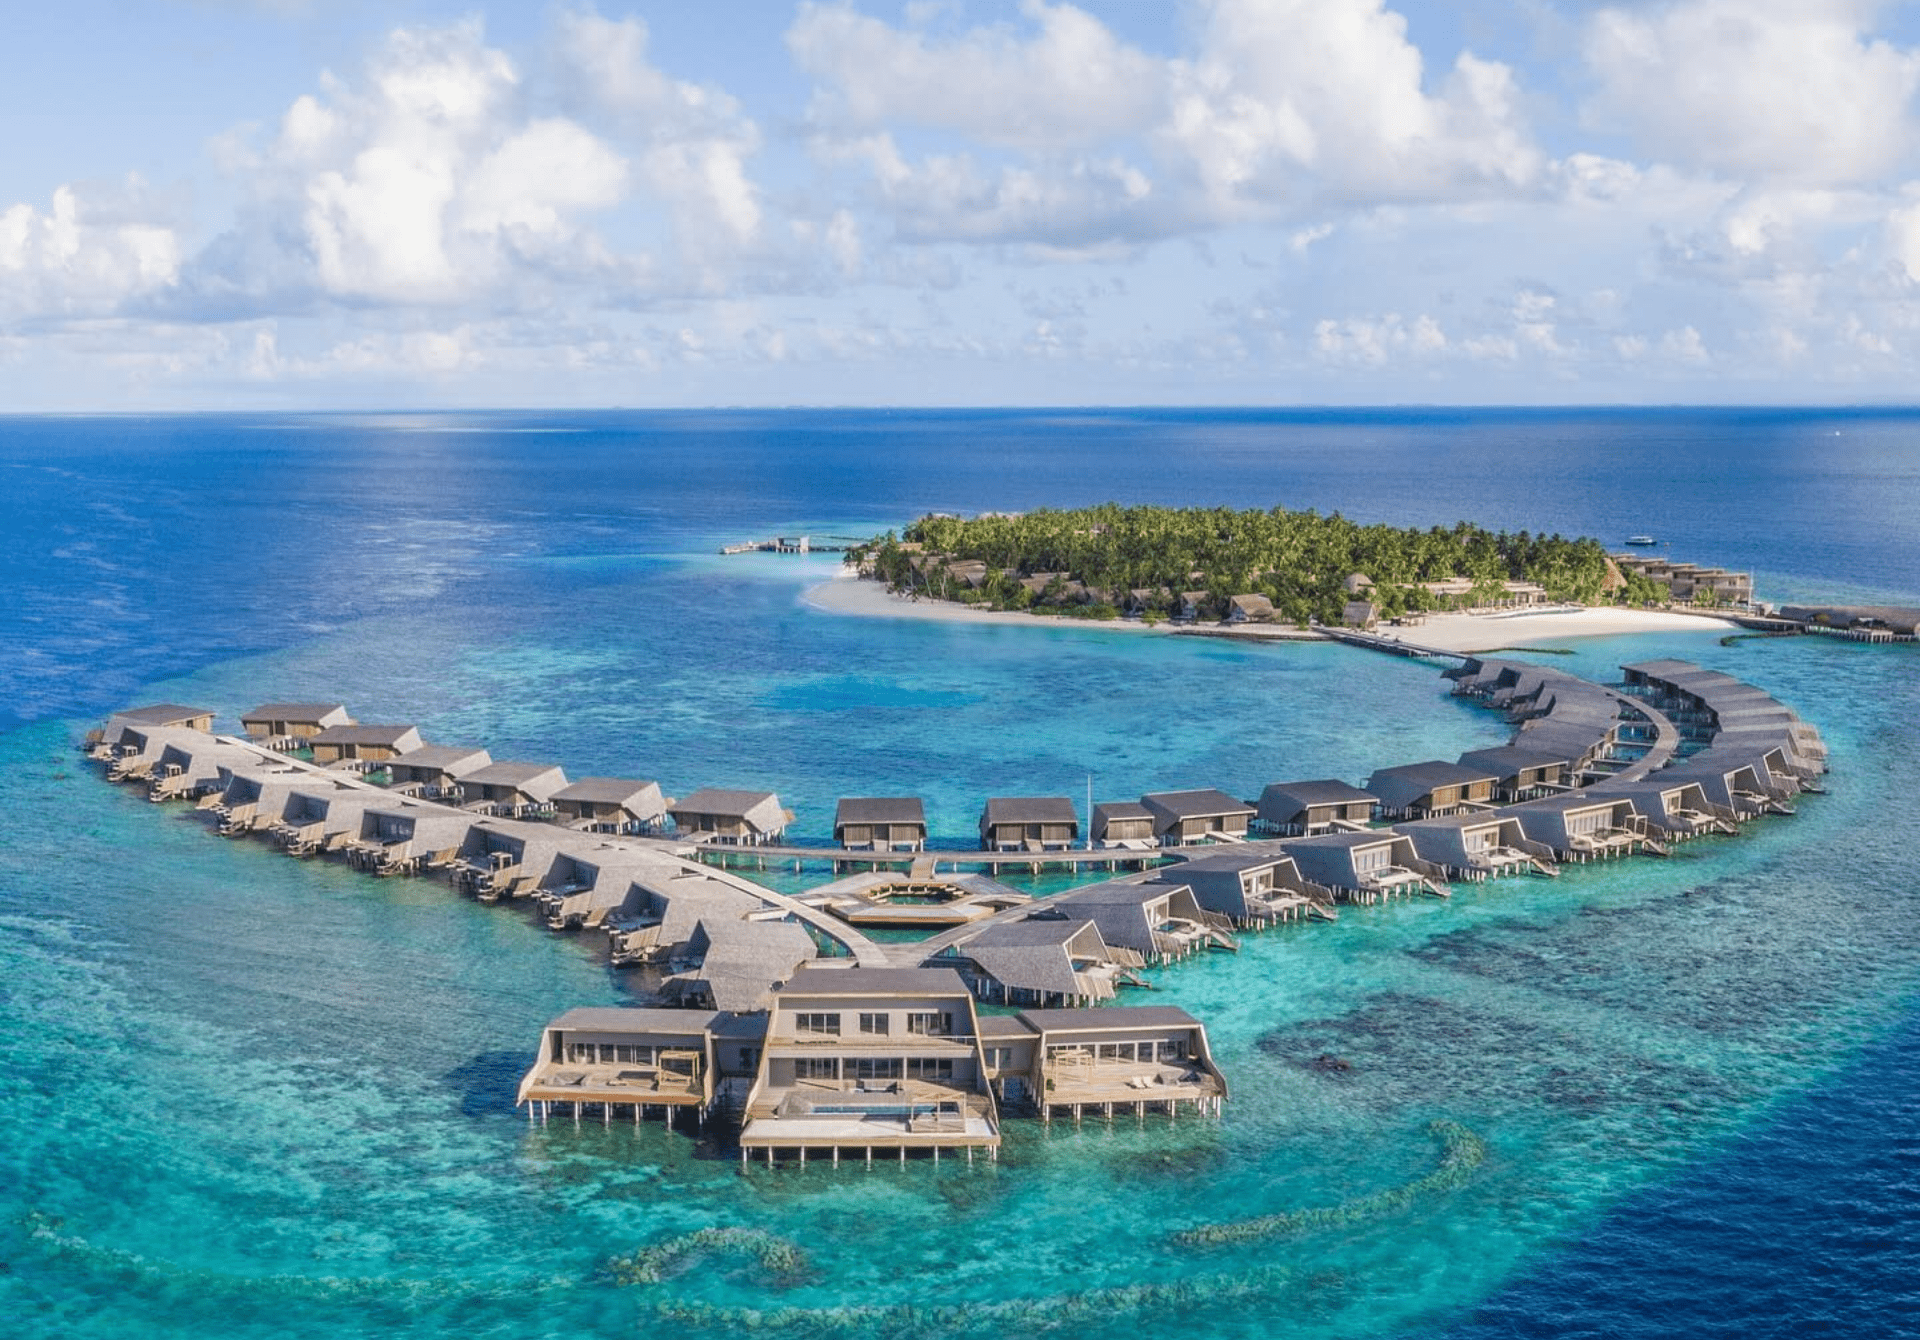  The St. Regis Maldives Vommuli Resort, Maldives